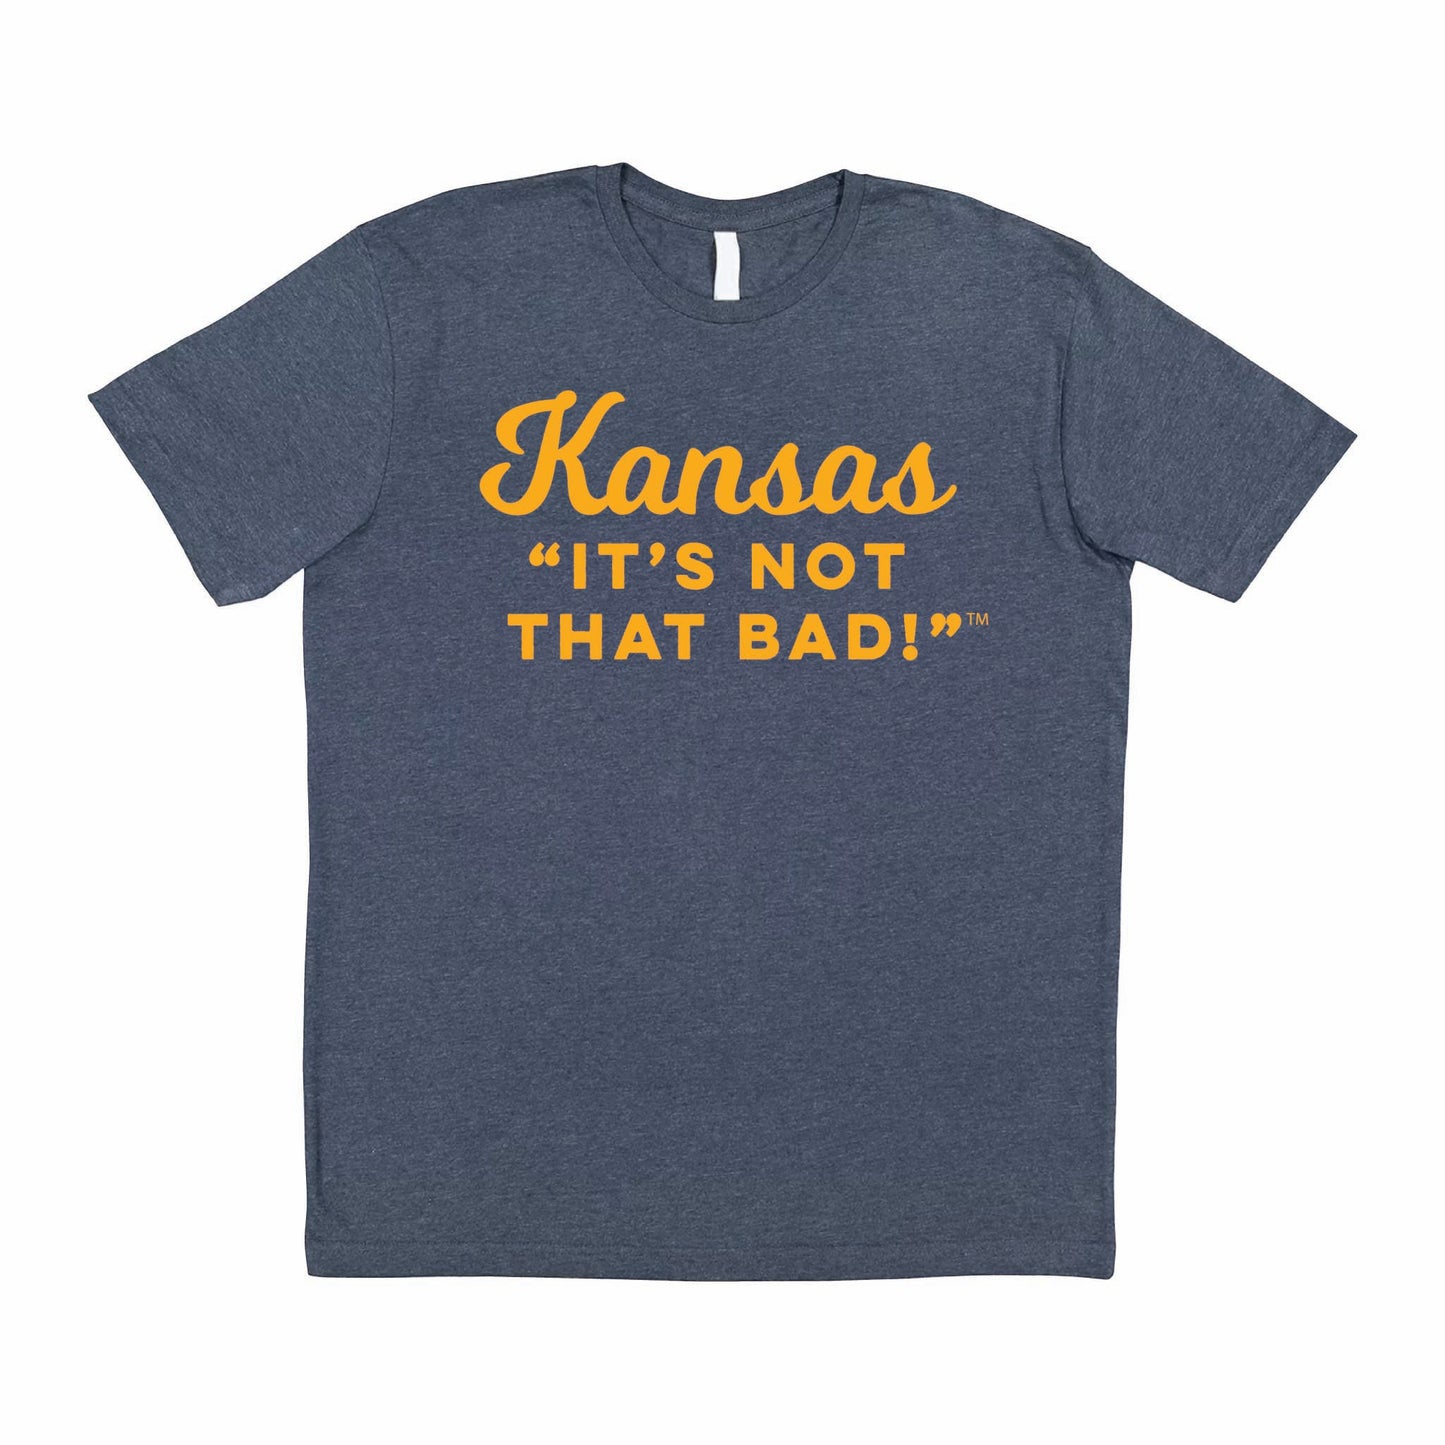 Kansas "It's Not That Bad!" Navy Tee